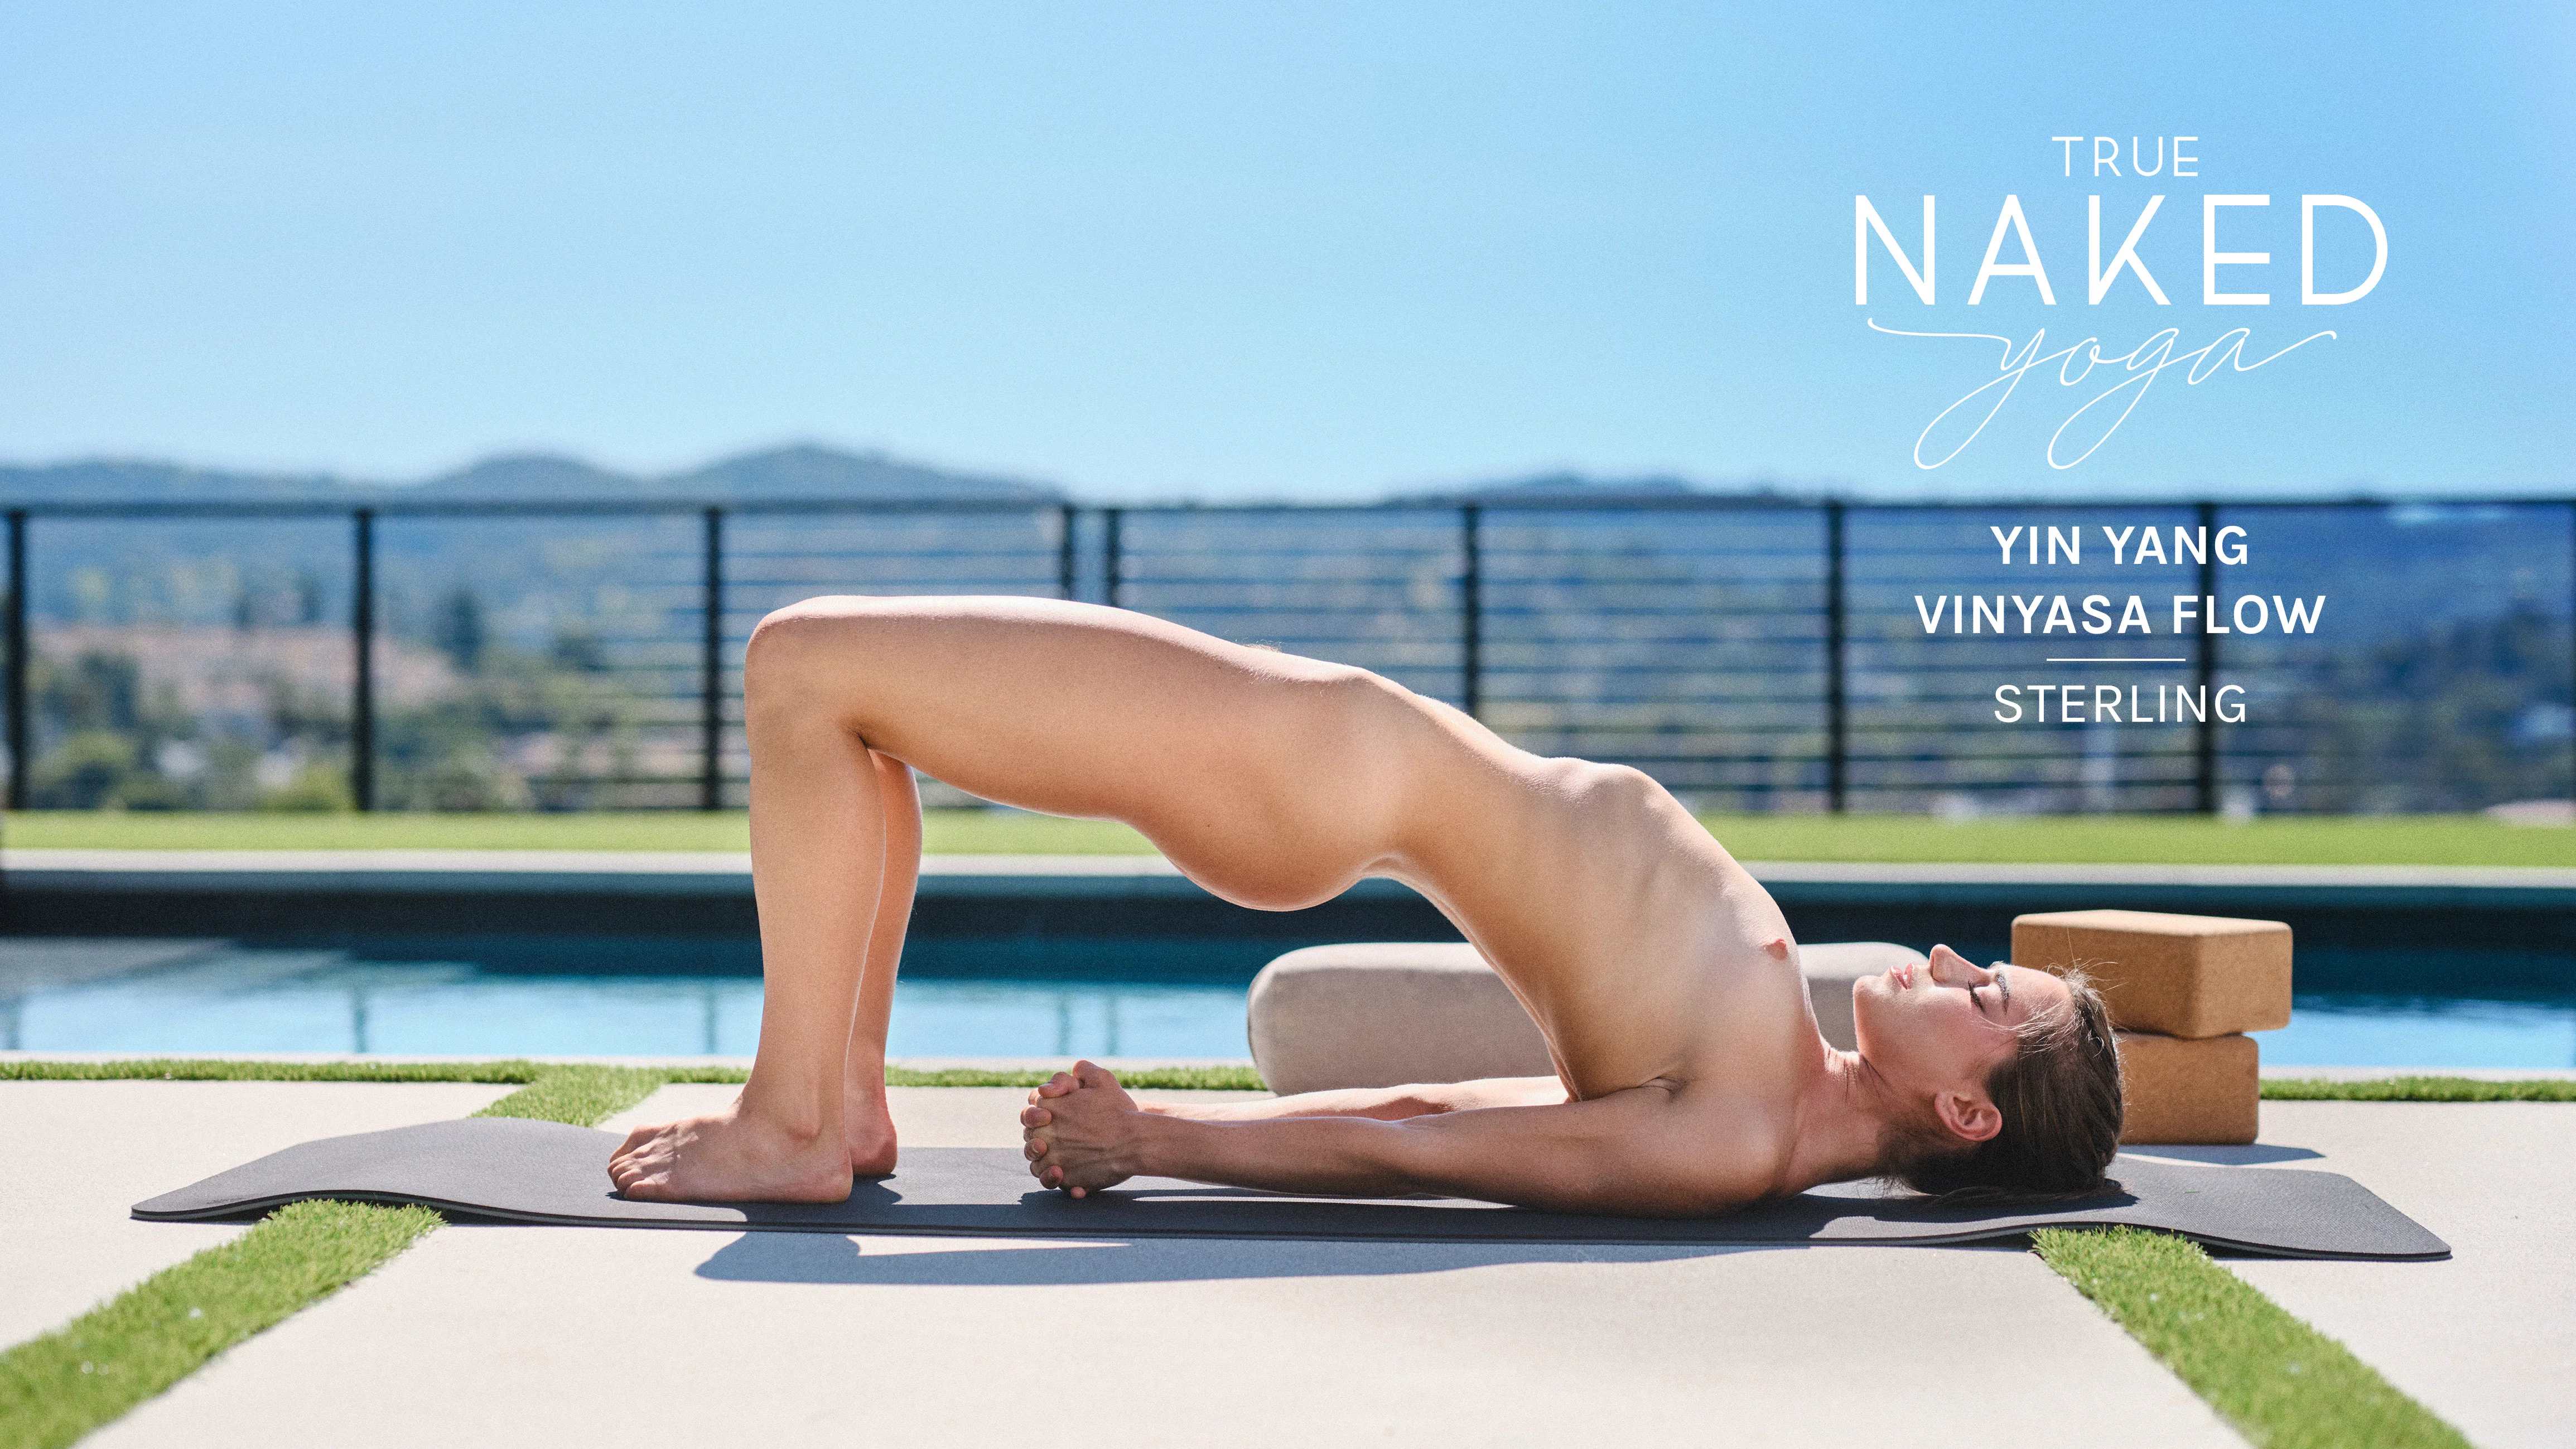 carmella diaz share true naked yoga photos